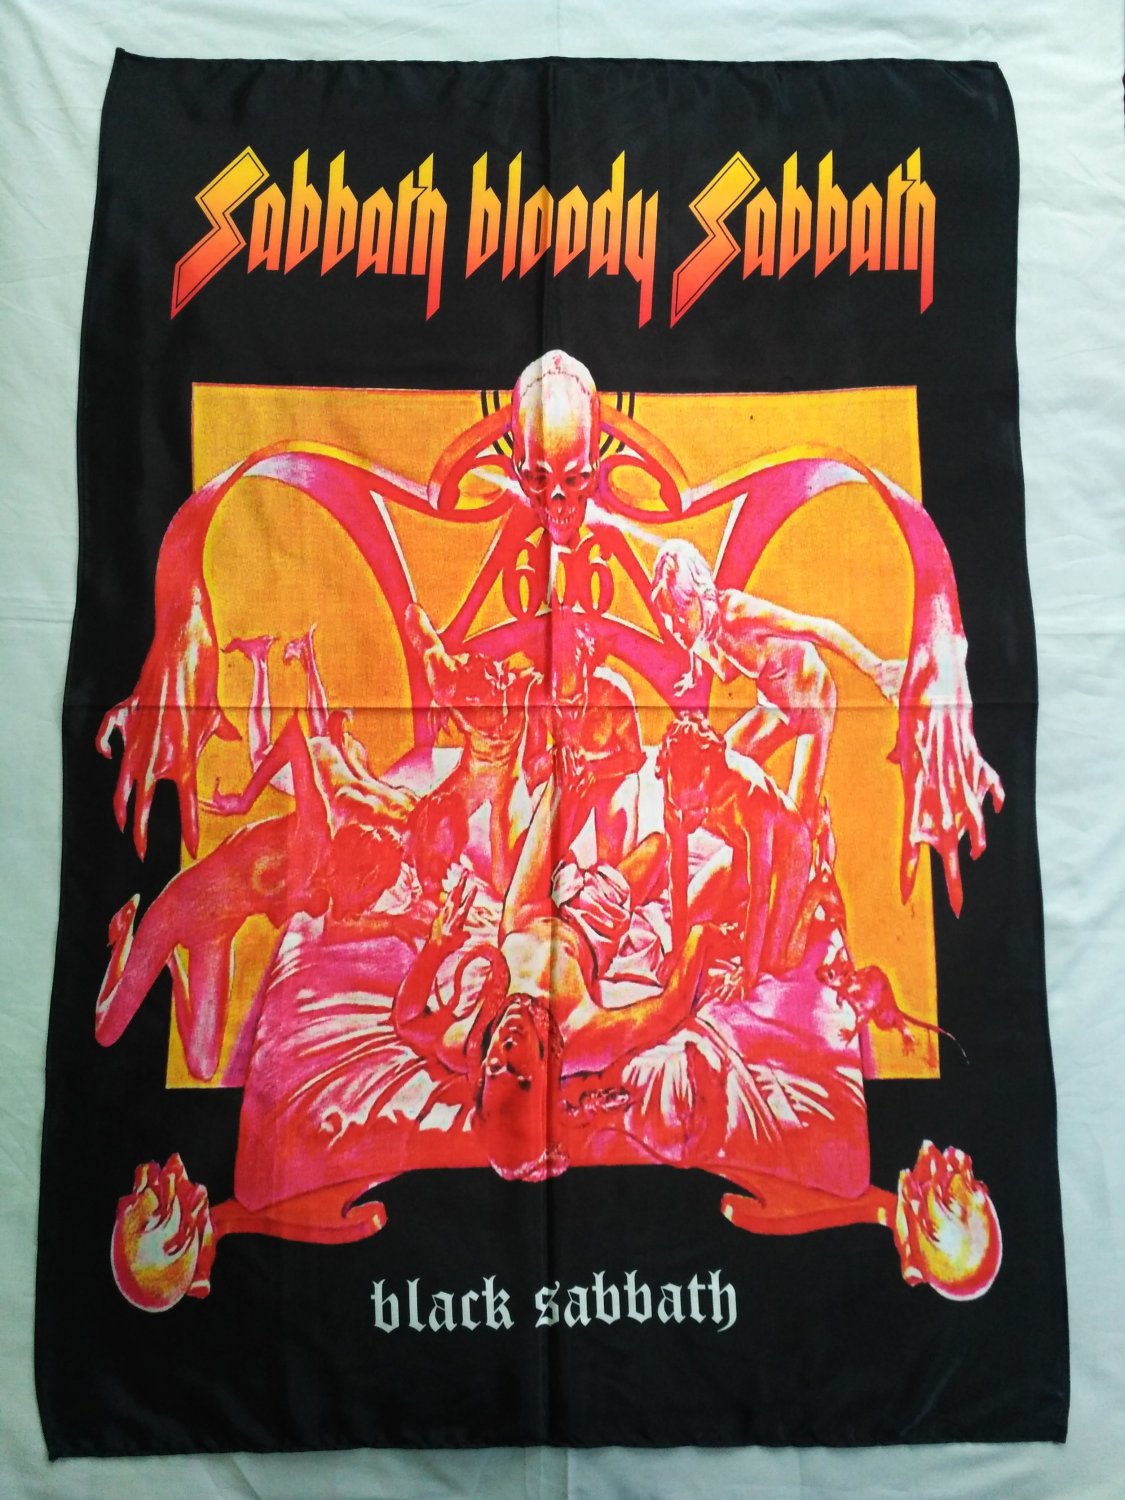 BLACK SABBATH - Sabbath bloody sabbath FLAG cloth POSTER Banner Heavy METAL Ozzy